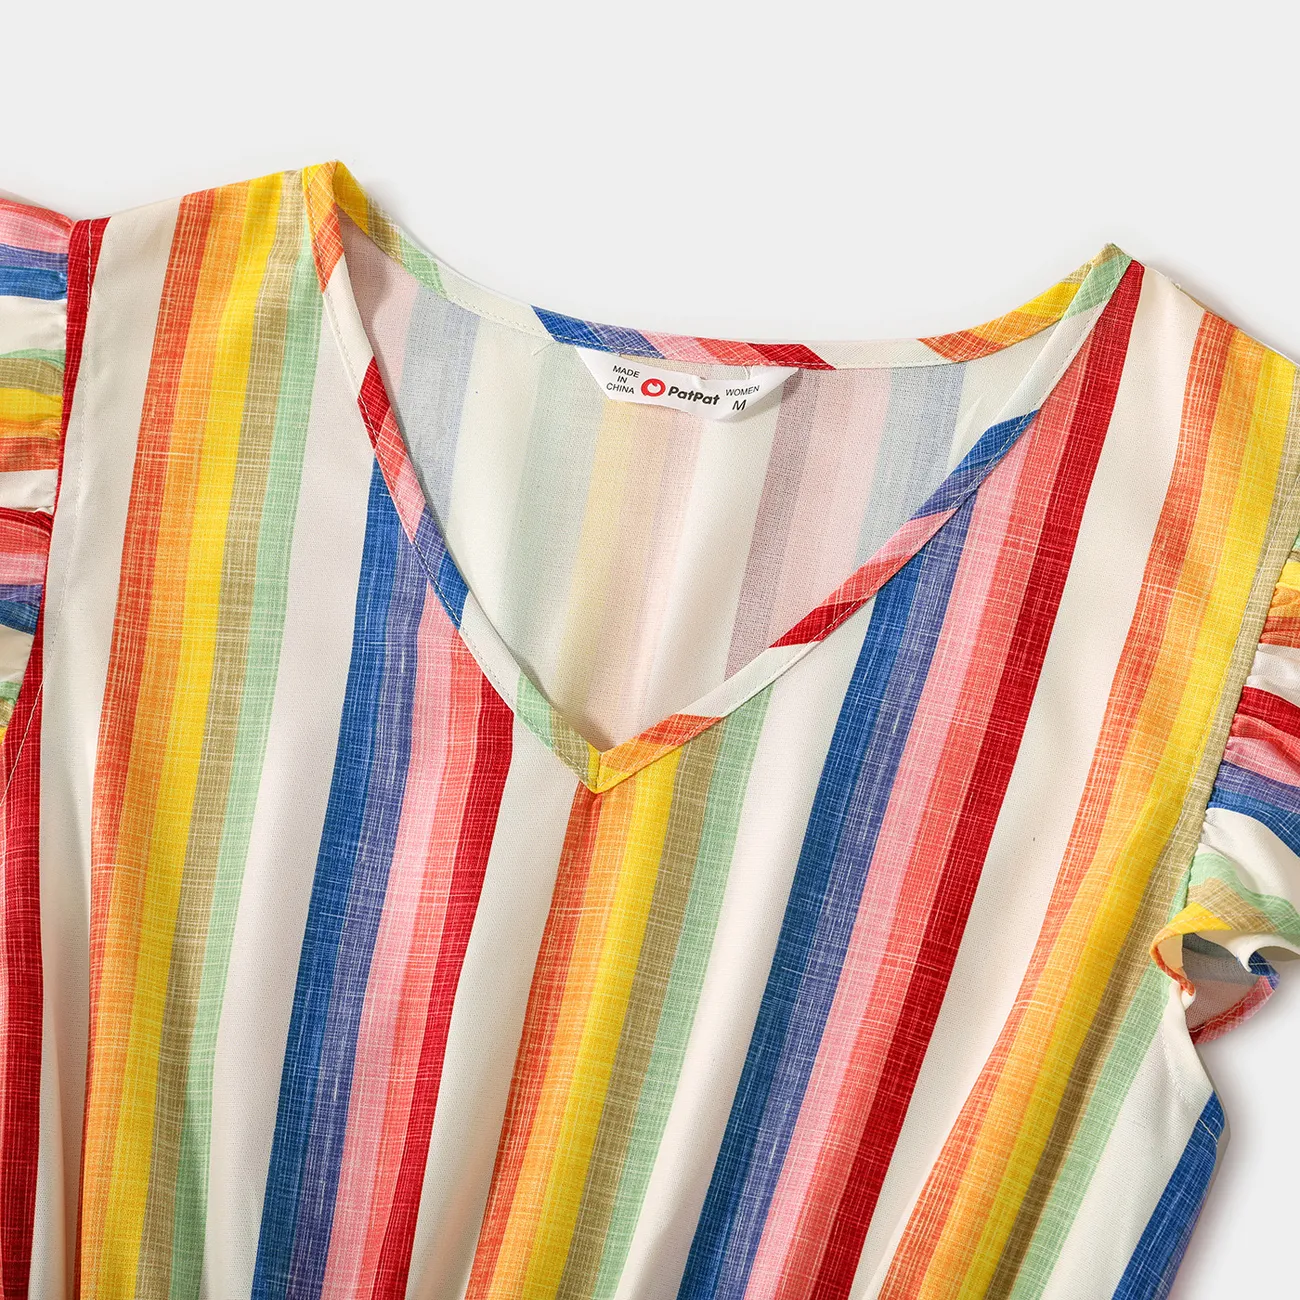 Family Matching Colorful Striped V Neck Flutter-sleeve Dresses and Short-sleeve T-shirts Sets COLOREDSTRIPES big image 1